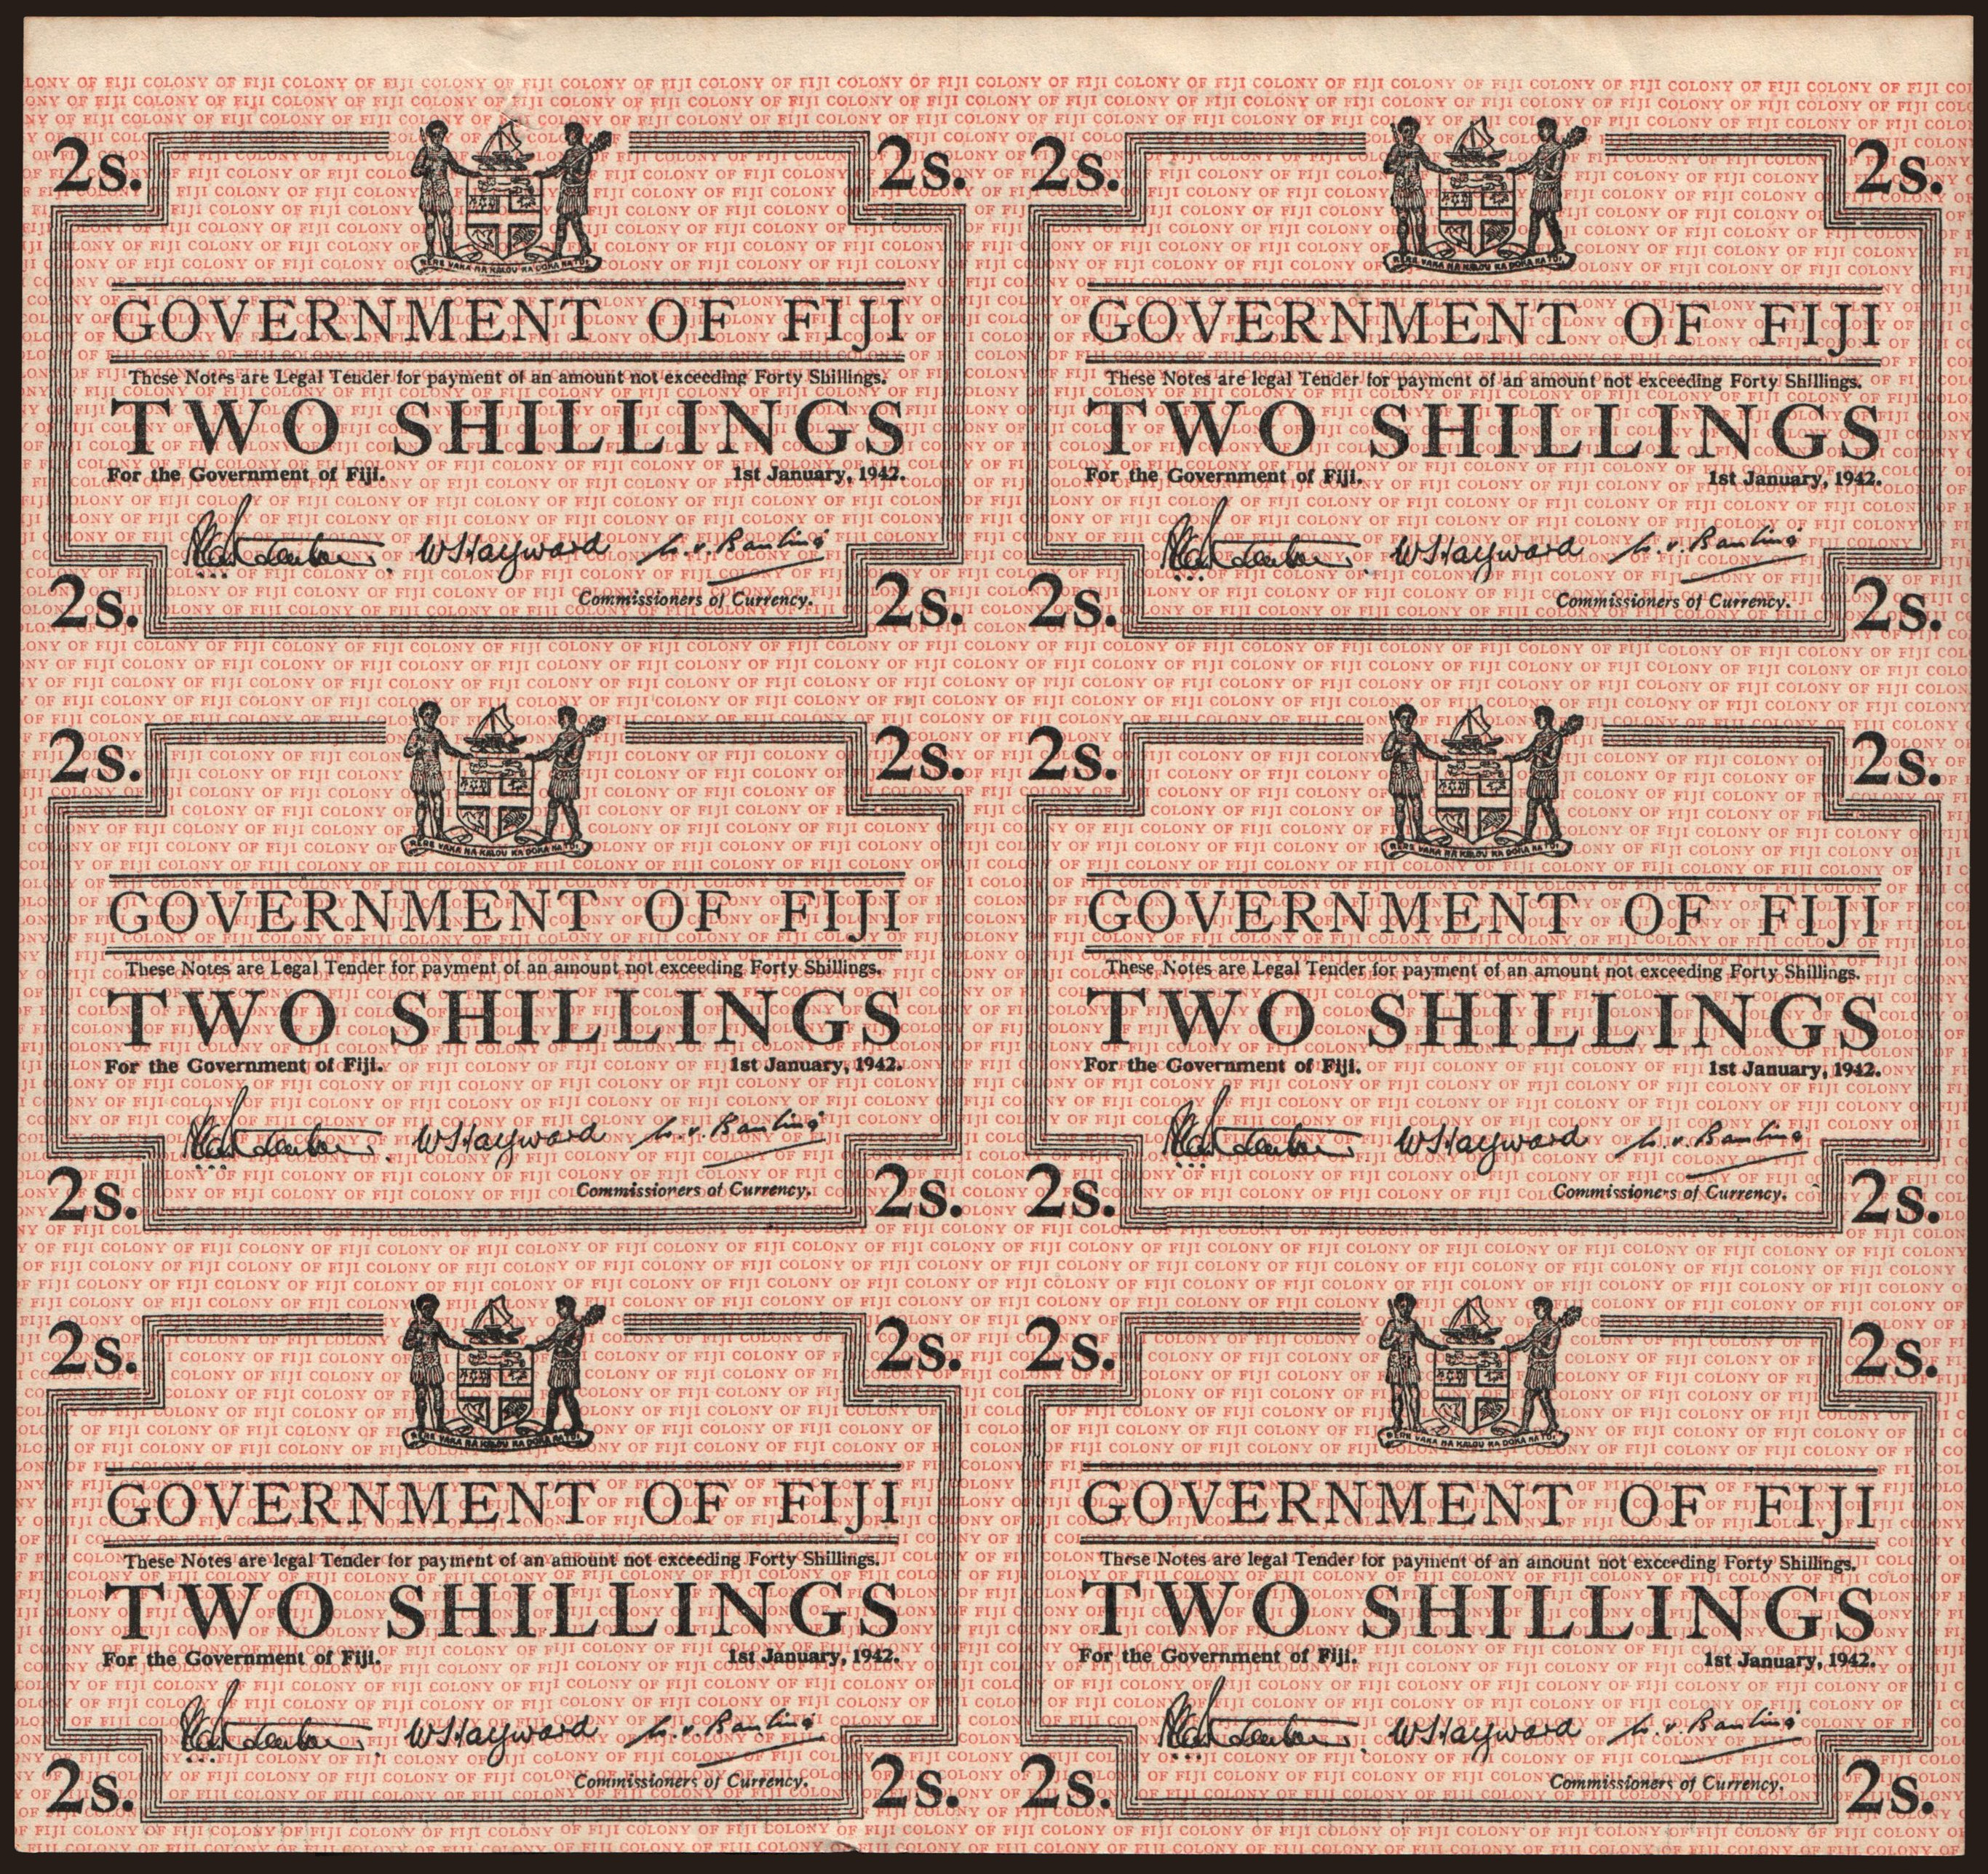 2 shillings, 1942, (6x)